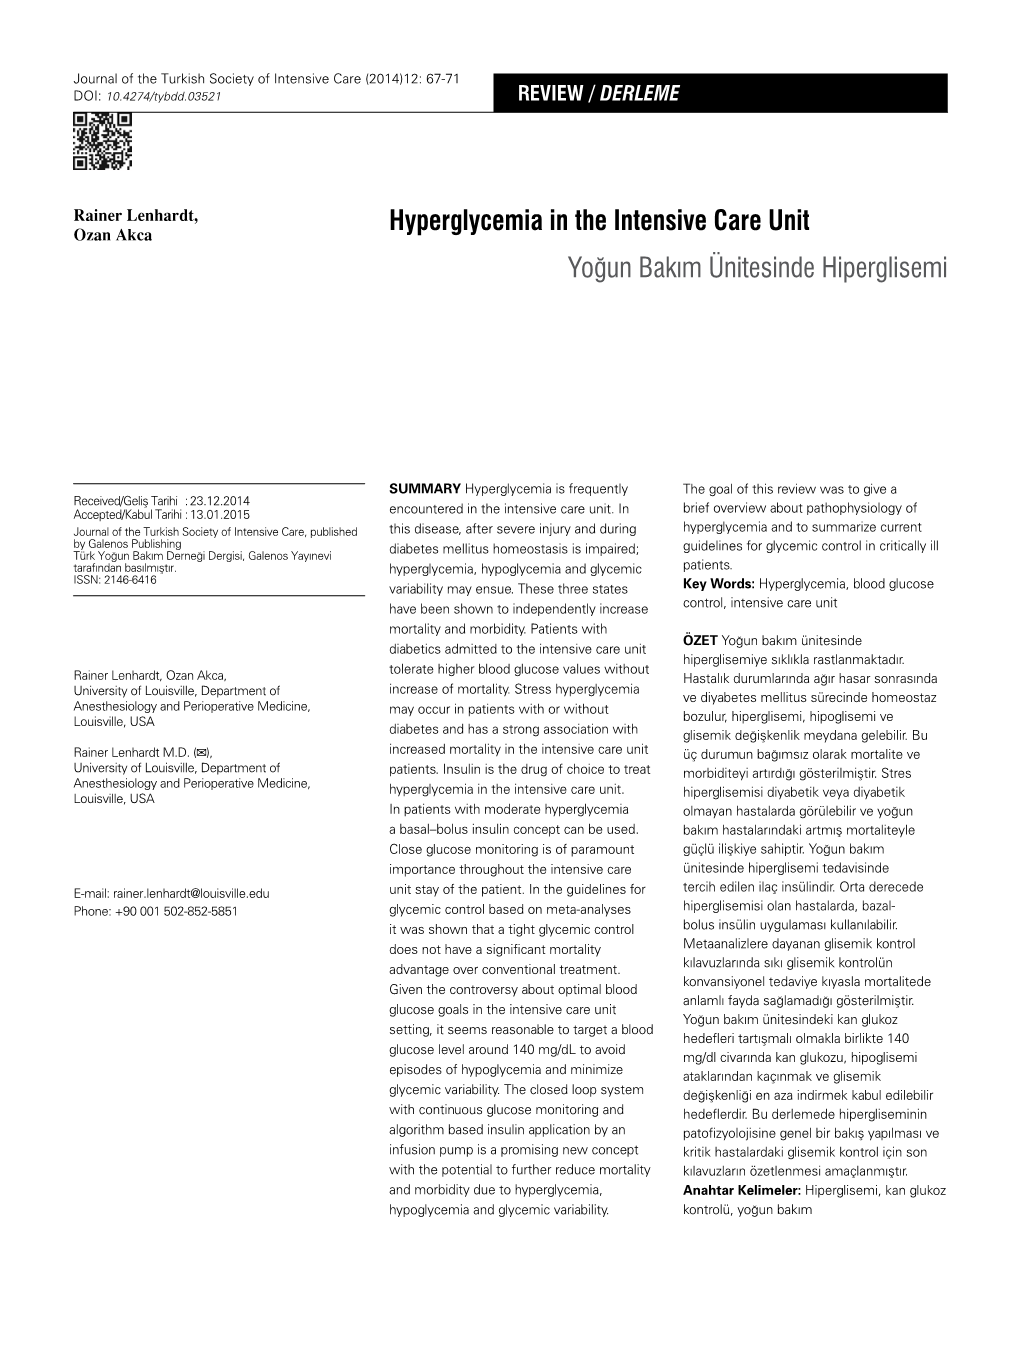 Hyperglycemia in the Intensive Care Unit Yoğun Bakım Ünitesinde Hiperglisemi